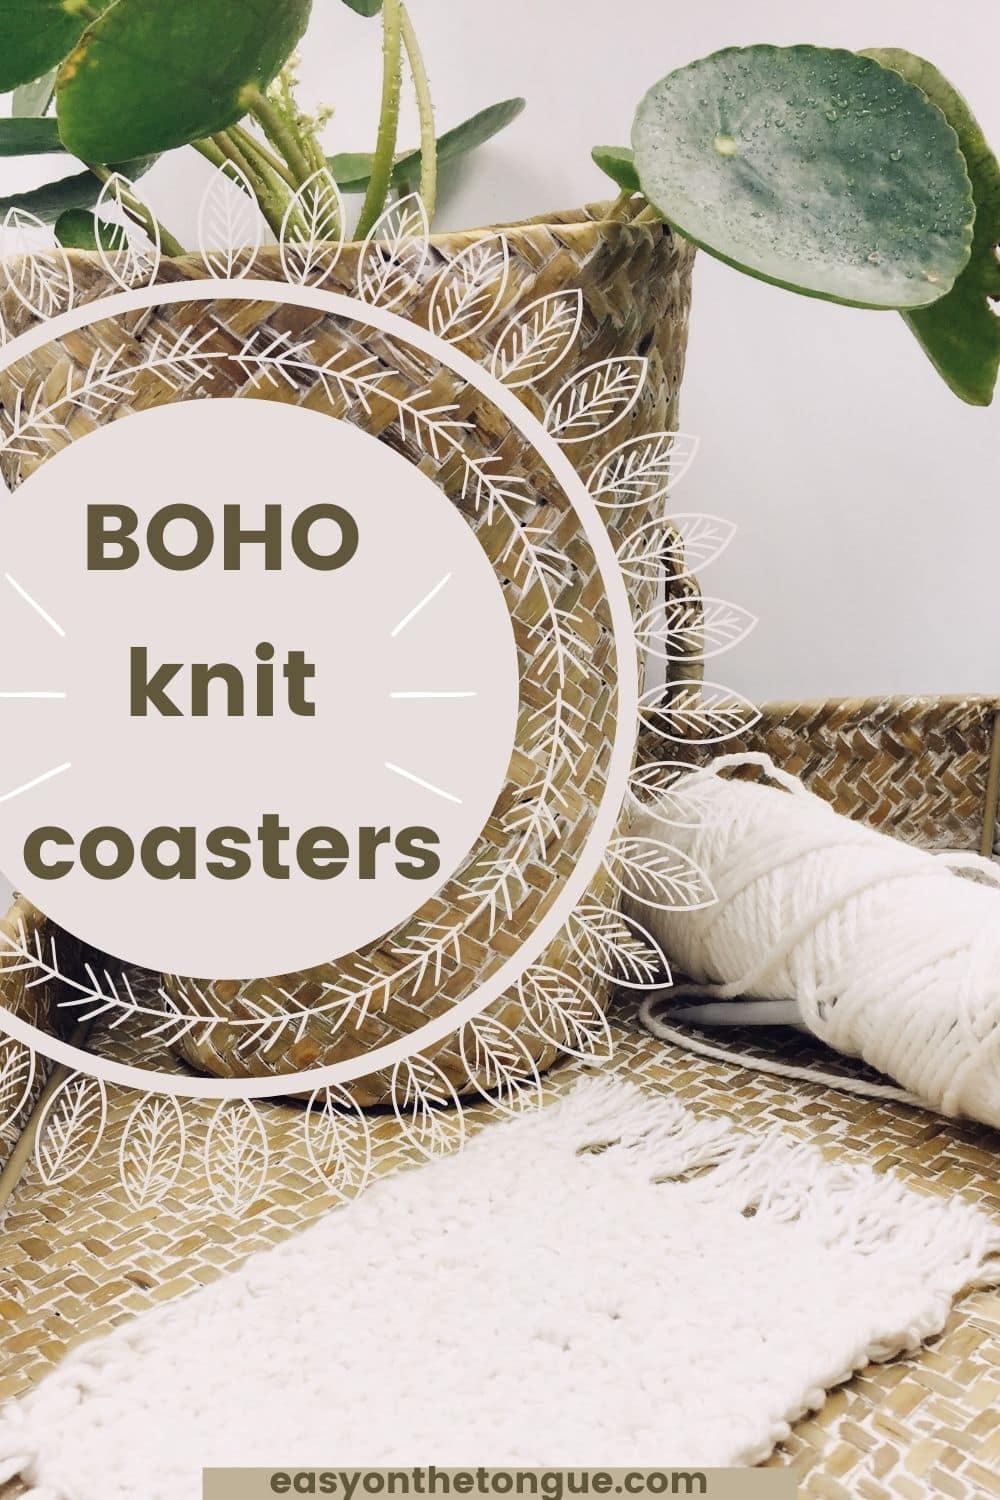 How to Knit Boho Coasters Free Pattern